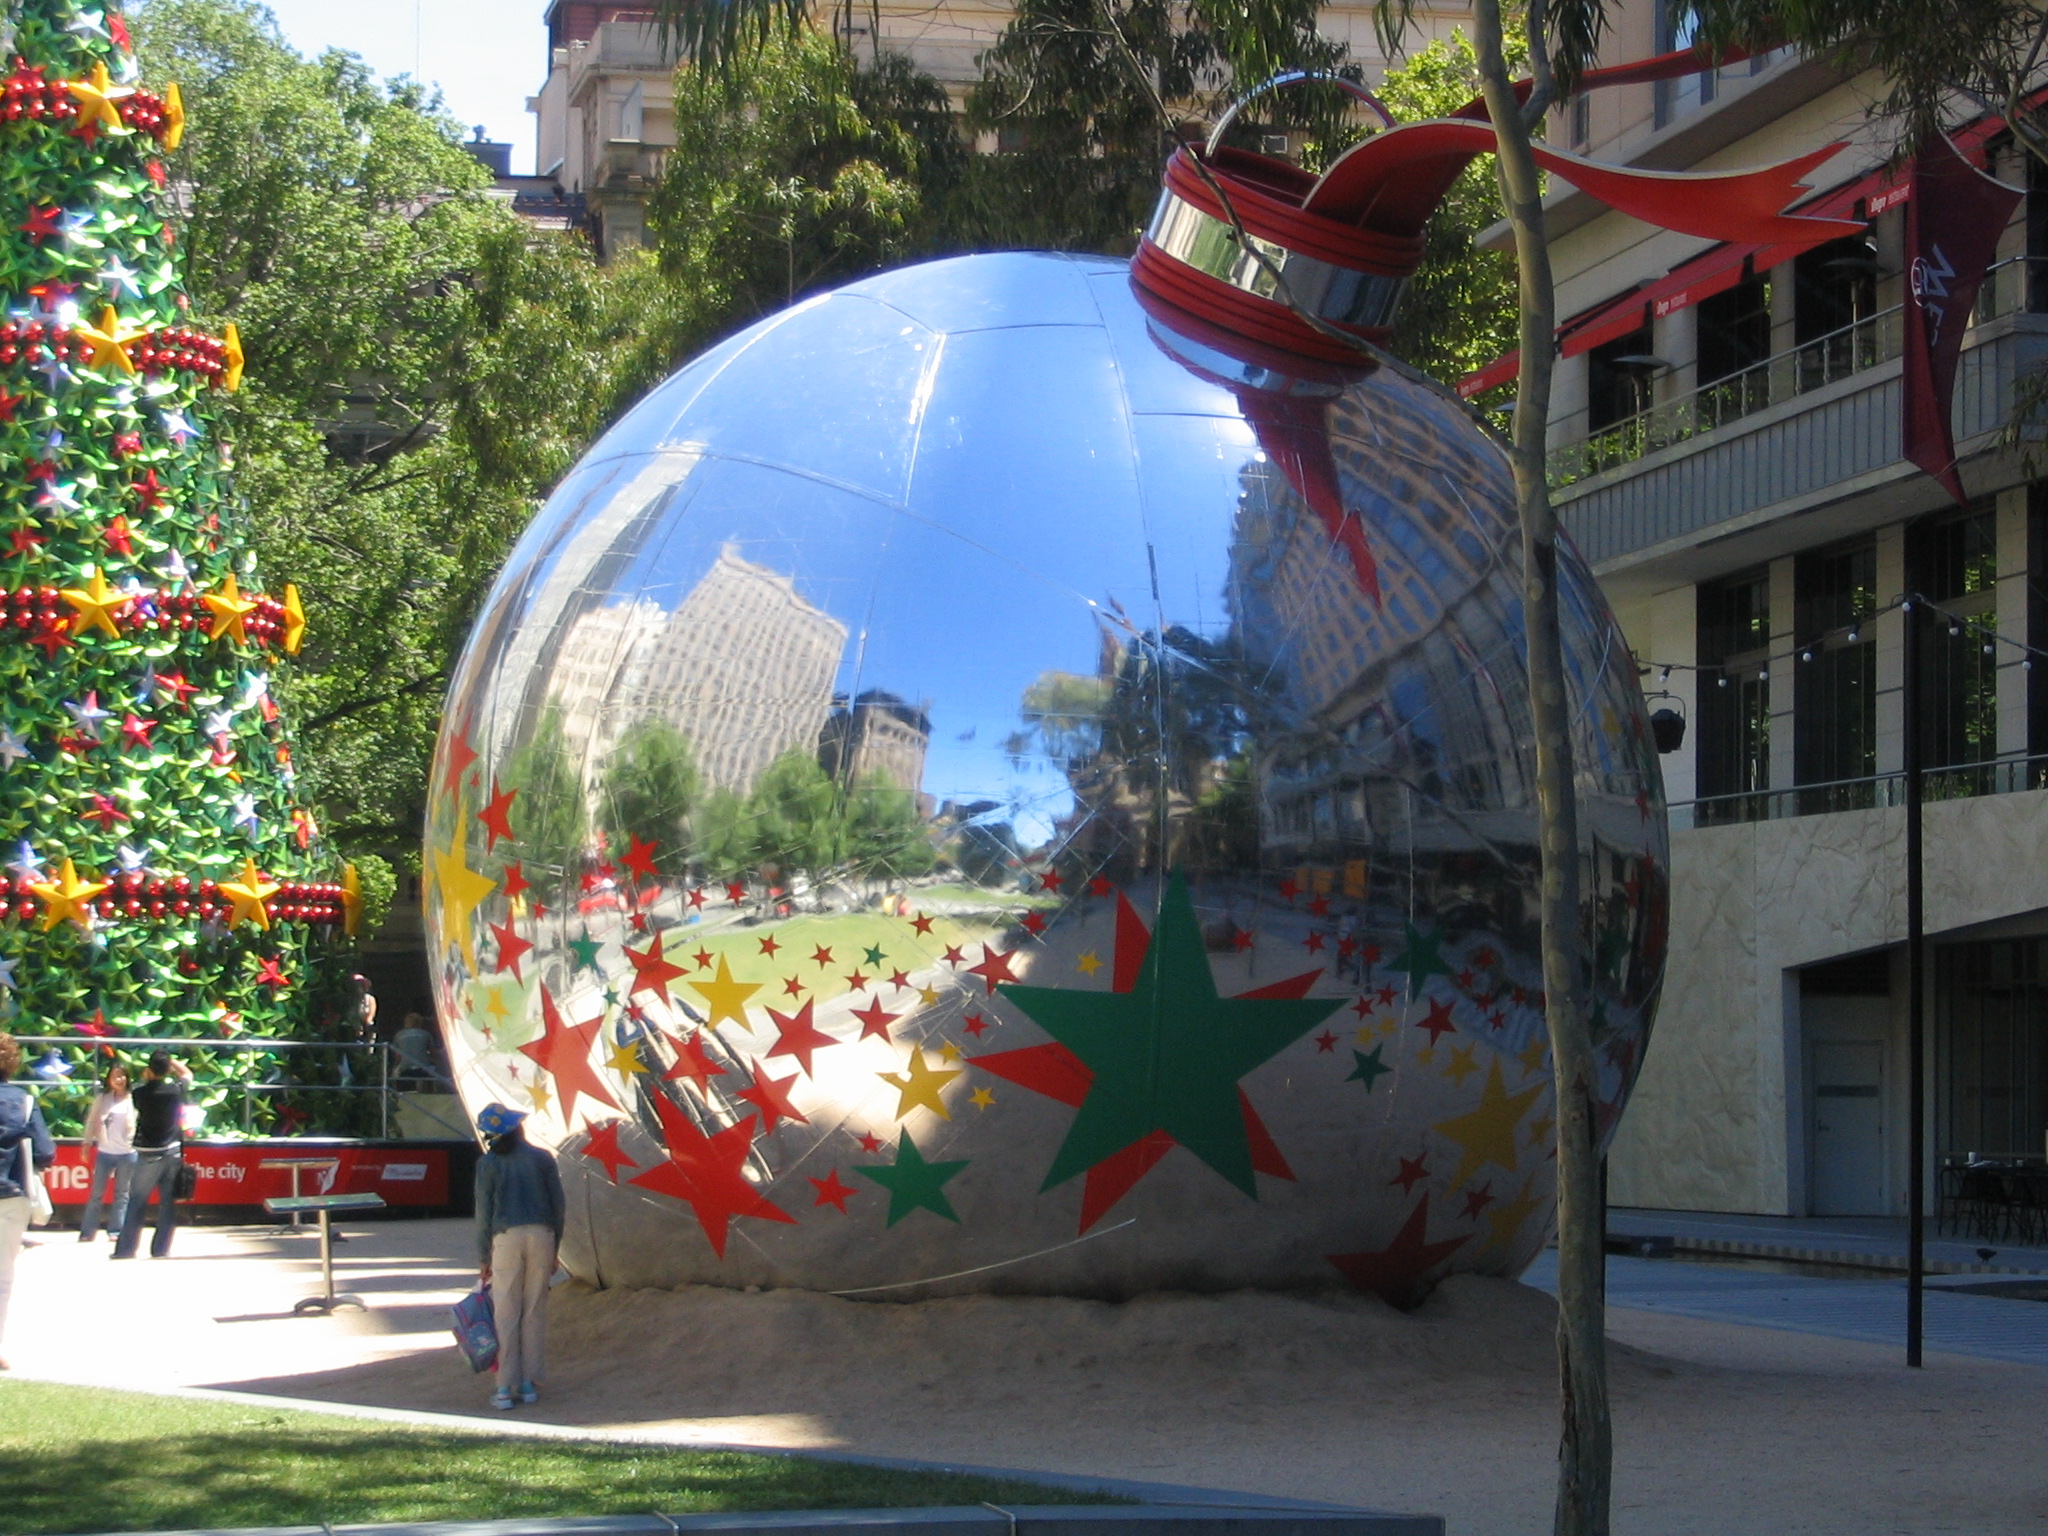 File:Giant christmas ball.jpg - Wikimedia Commons